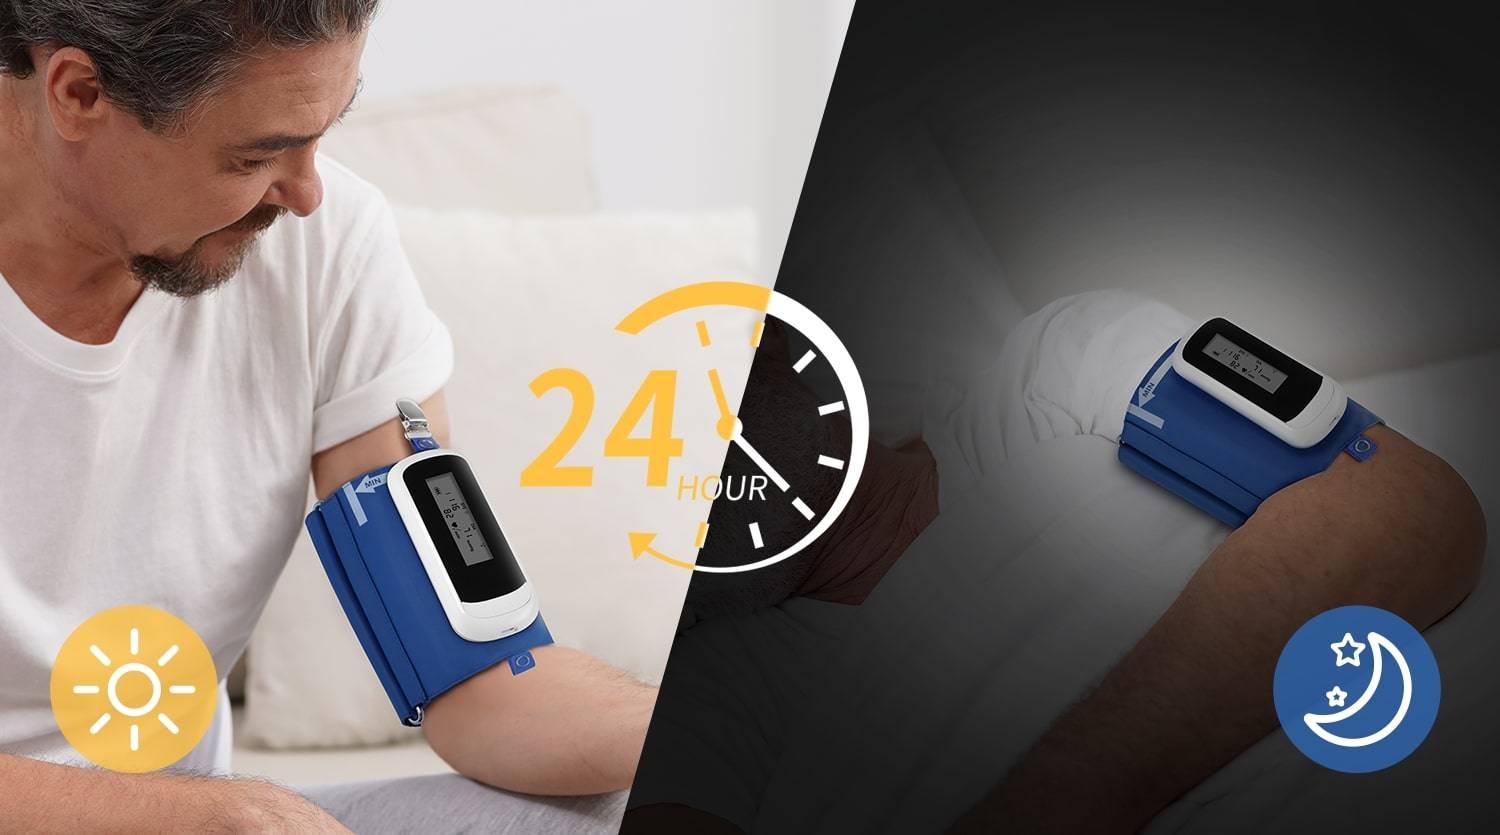 Ambulatory blood pressure monitor can measure blood pressure for 24 hours